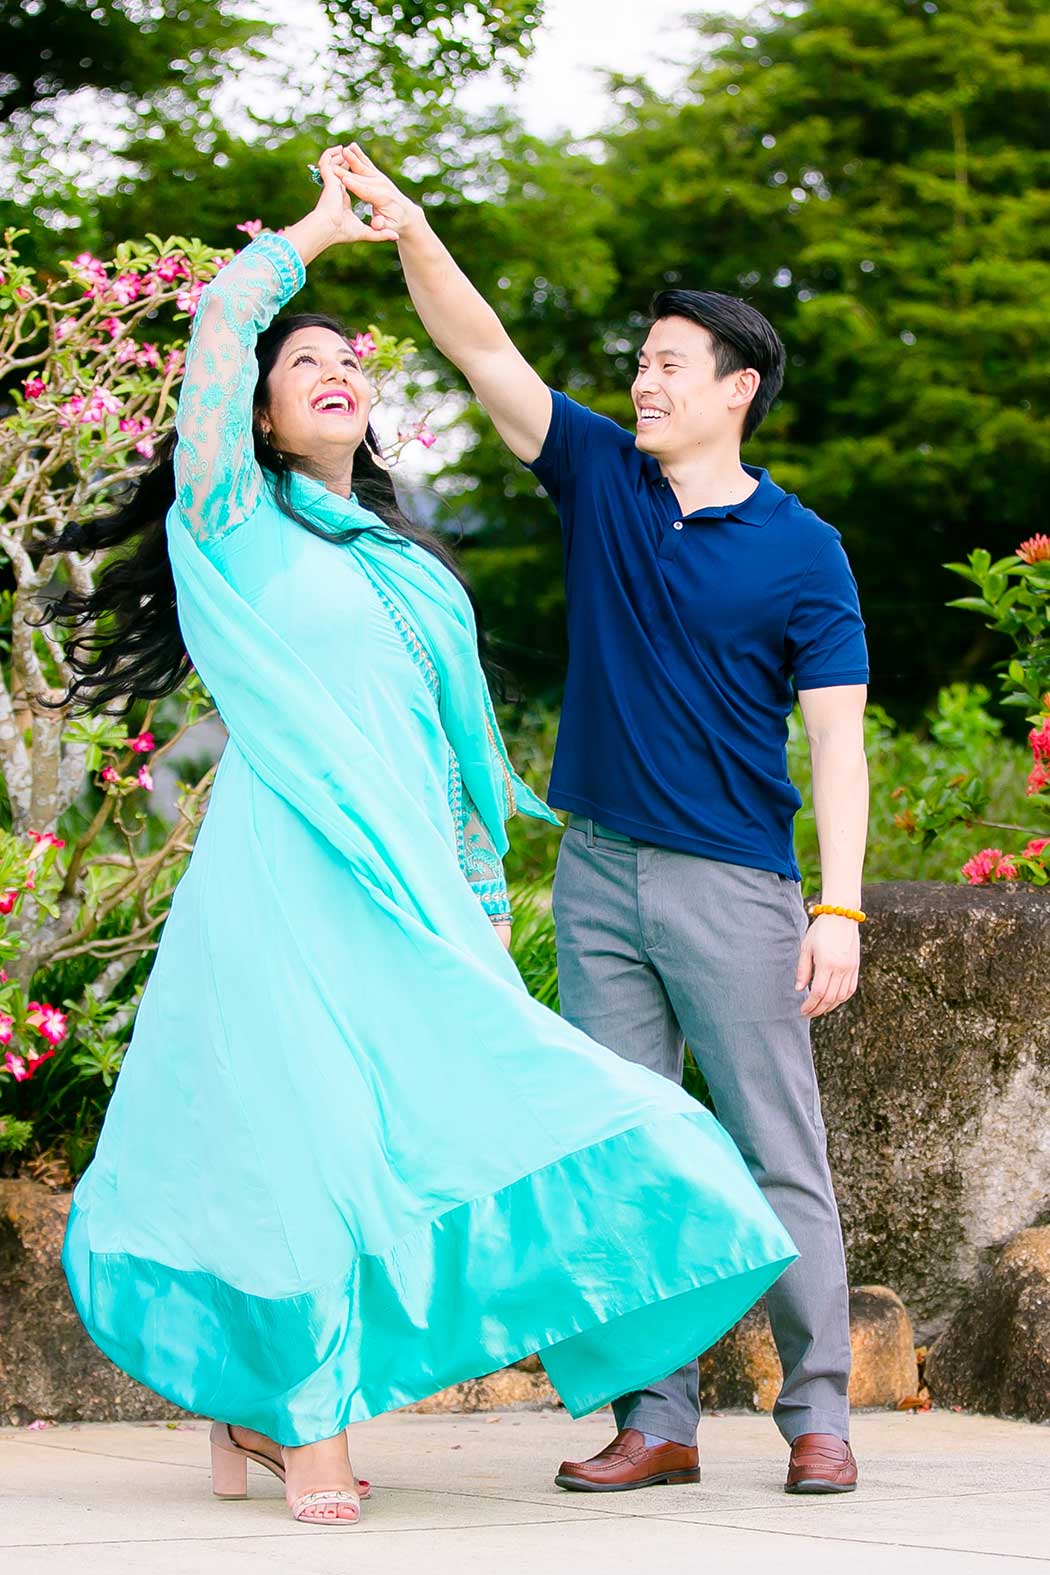 engagement photography at morikami | couple dancing during engagement photoshoot | dancing at morikami japanese gardens